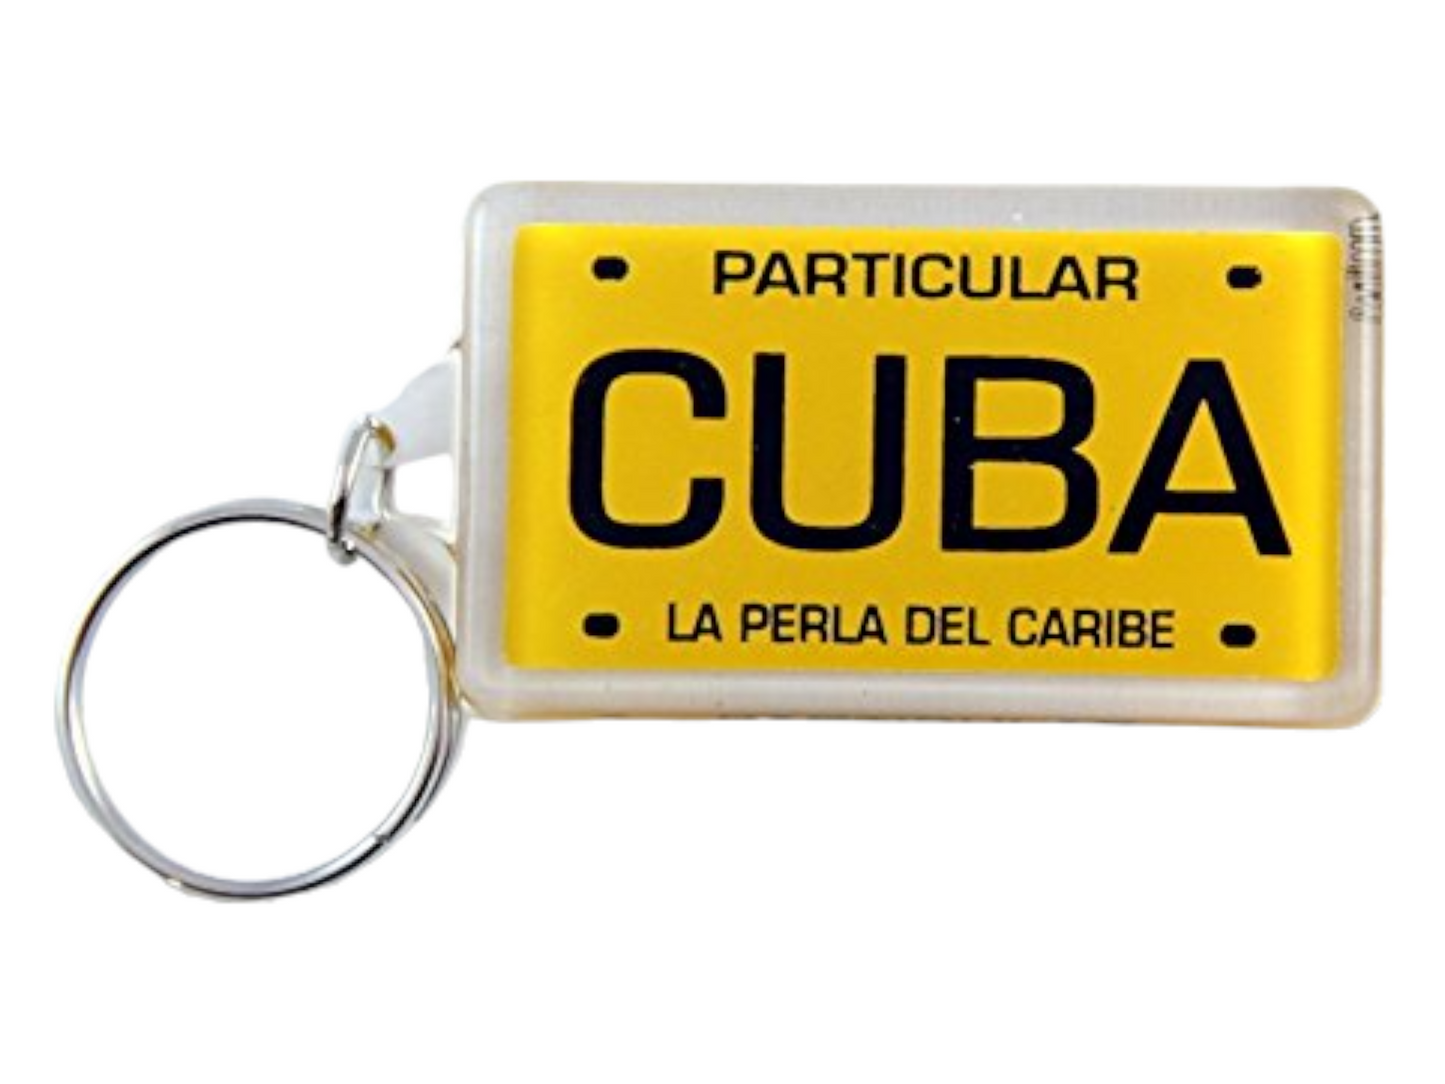 Cuba License Plate Acrylic Rectangular Souvenir Keychain 2.5 inches X 1.5 inches